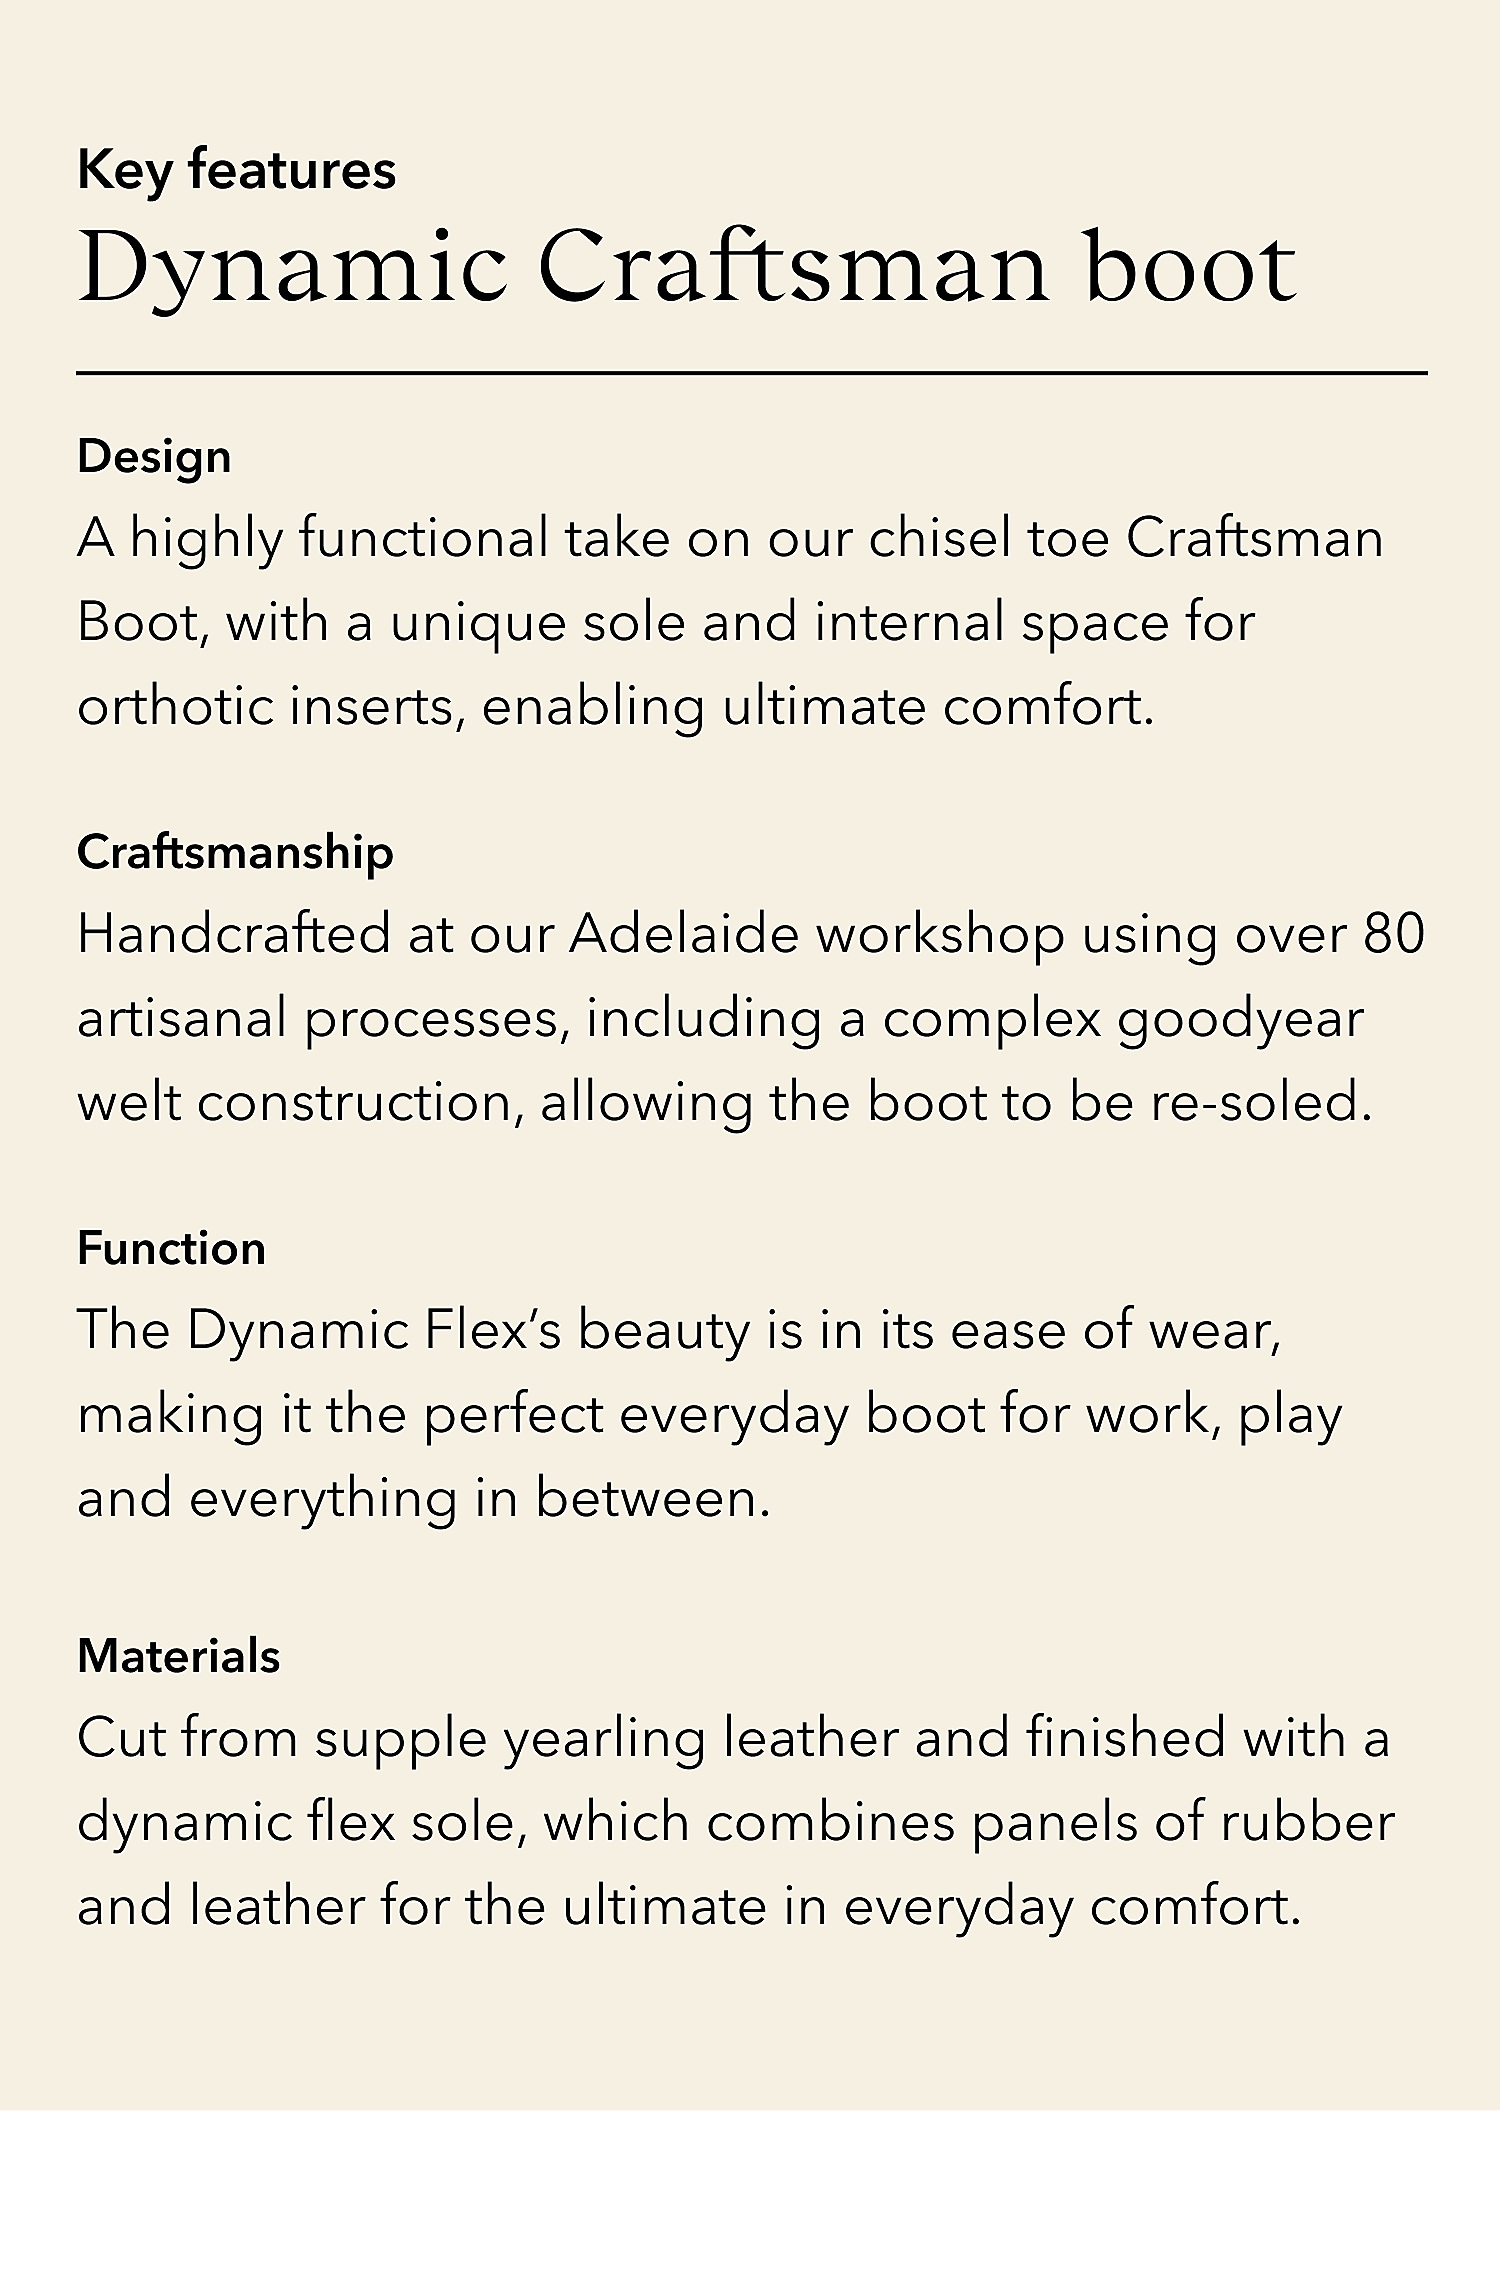 RM Williams Dynamic Flex Craftsman Boots Black US SZ 12.5 G